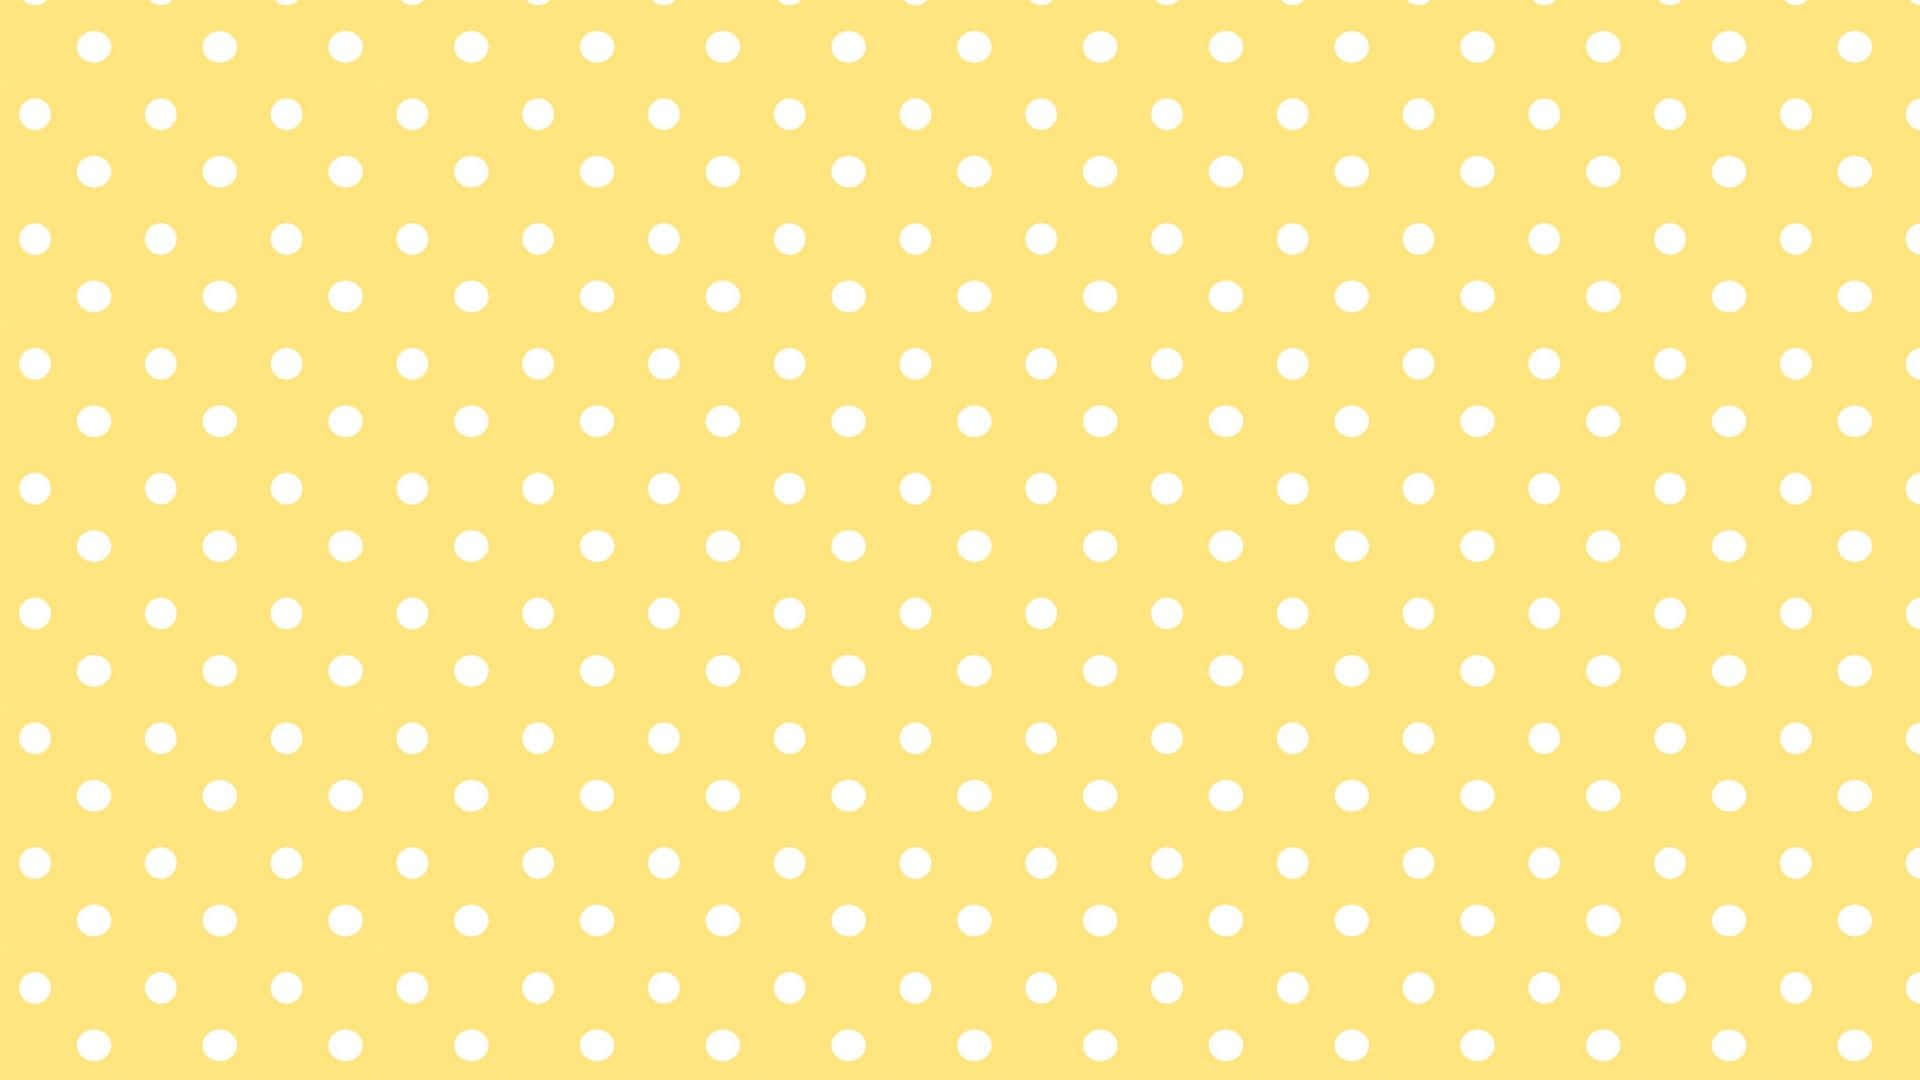 Dots yellow polka pink drop shadow ffff00 ff1493 wallpaper 4K HD